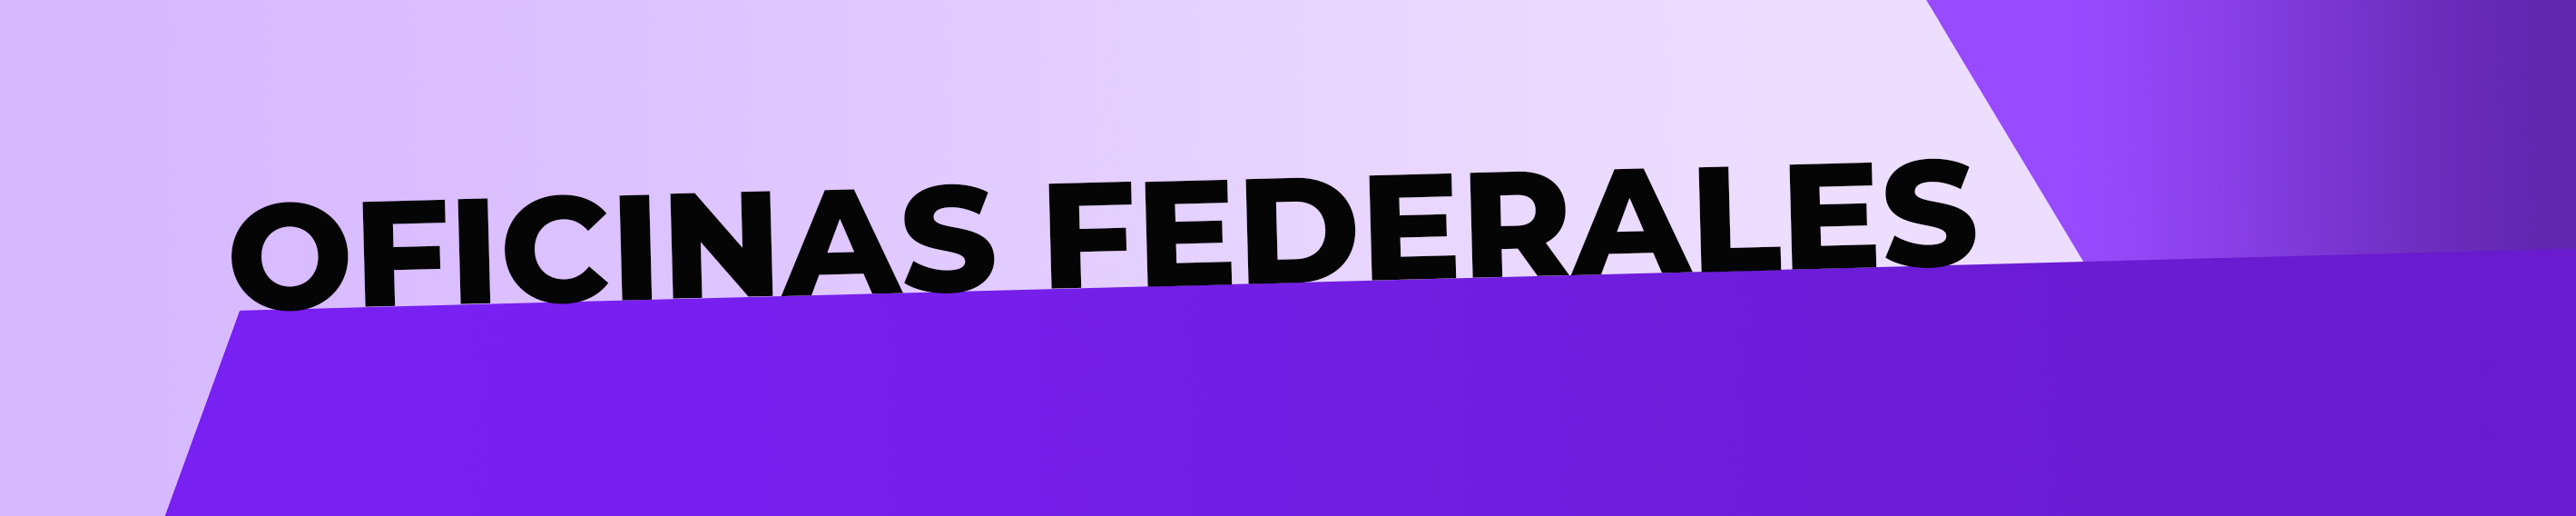 Federal Banner